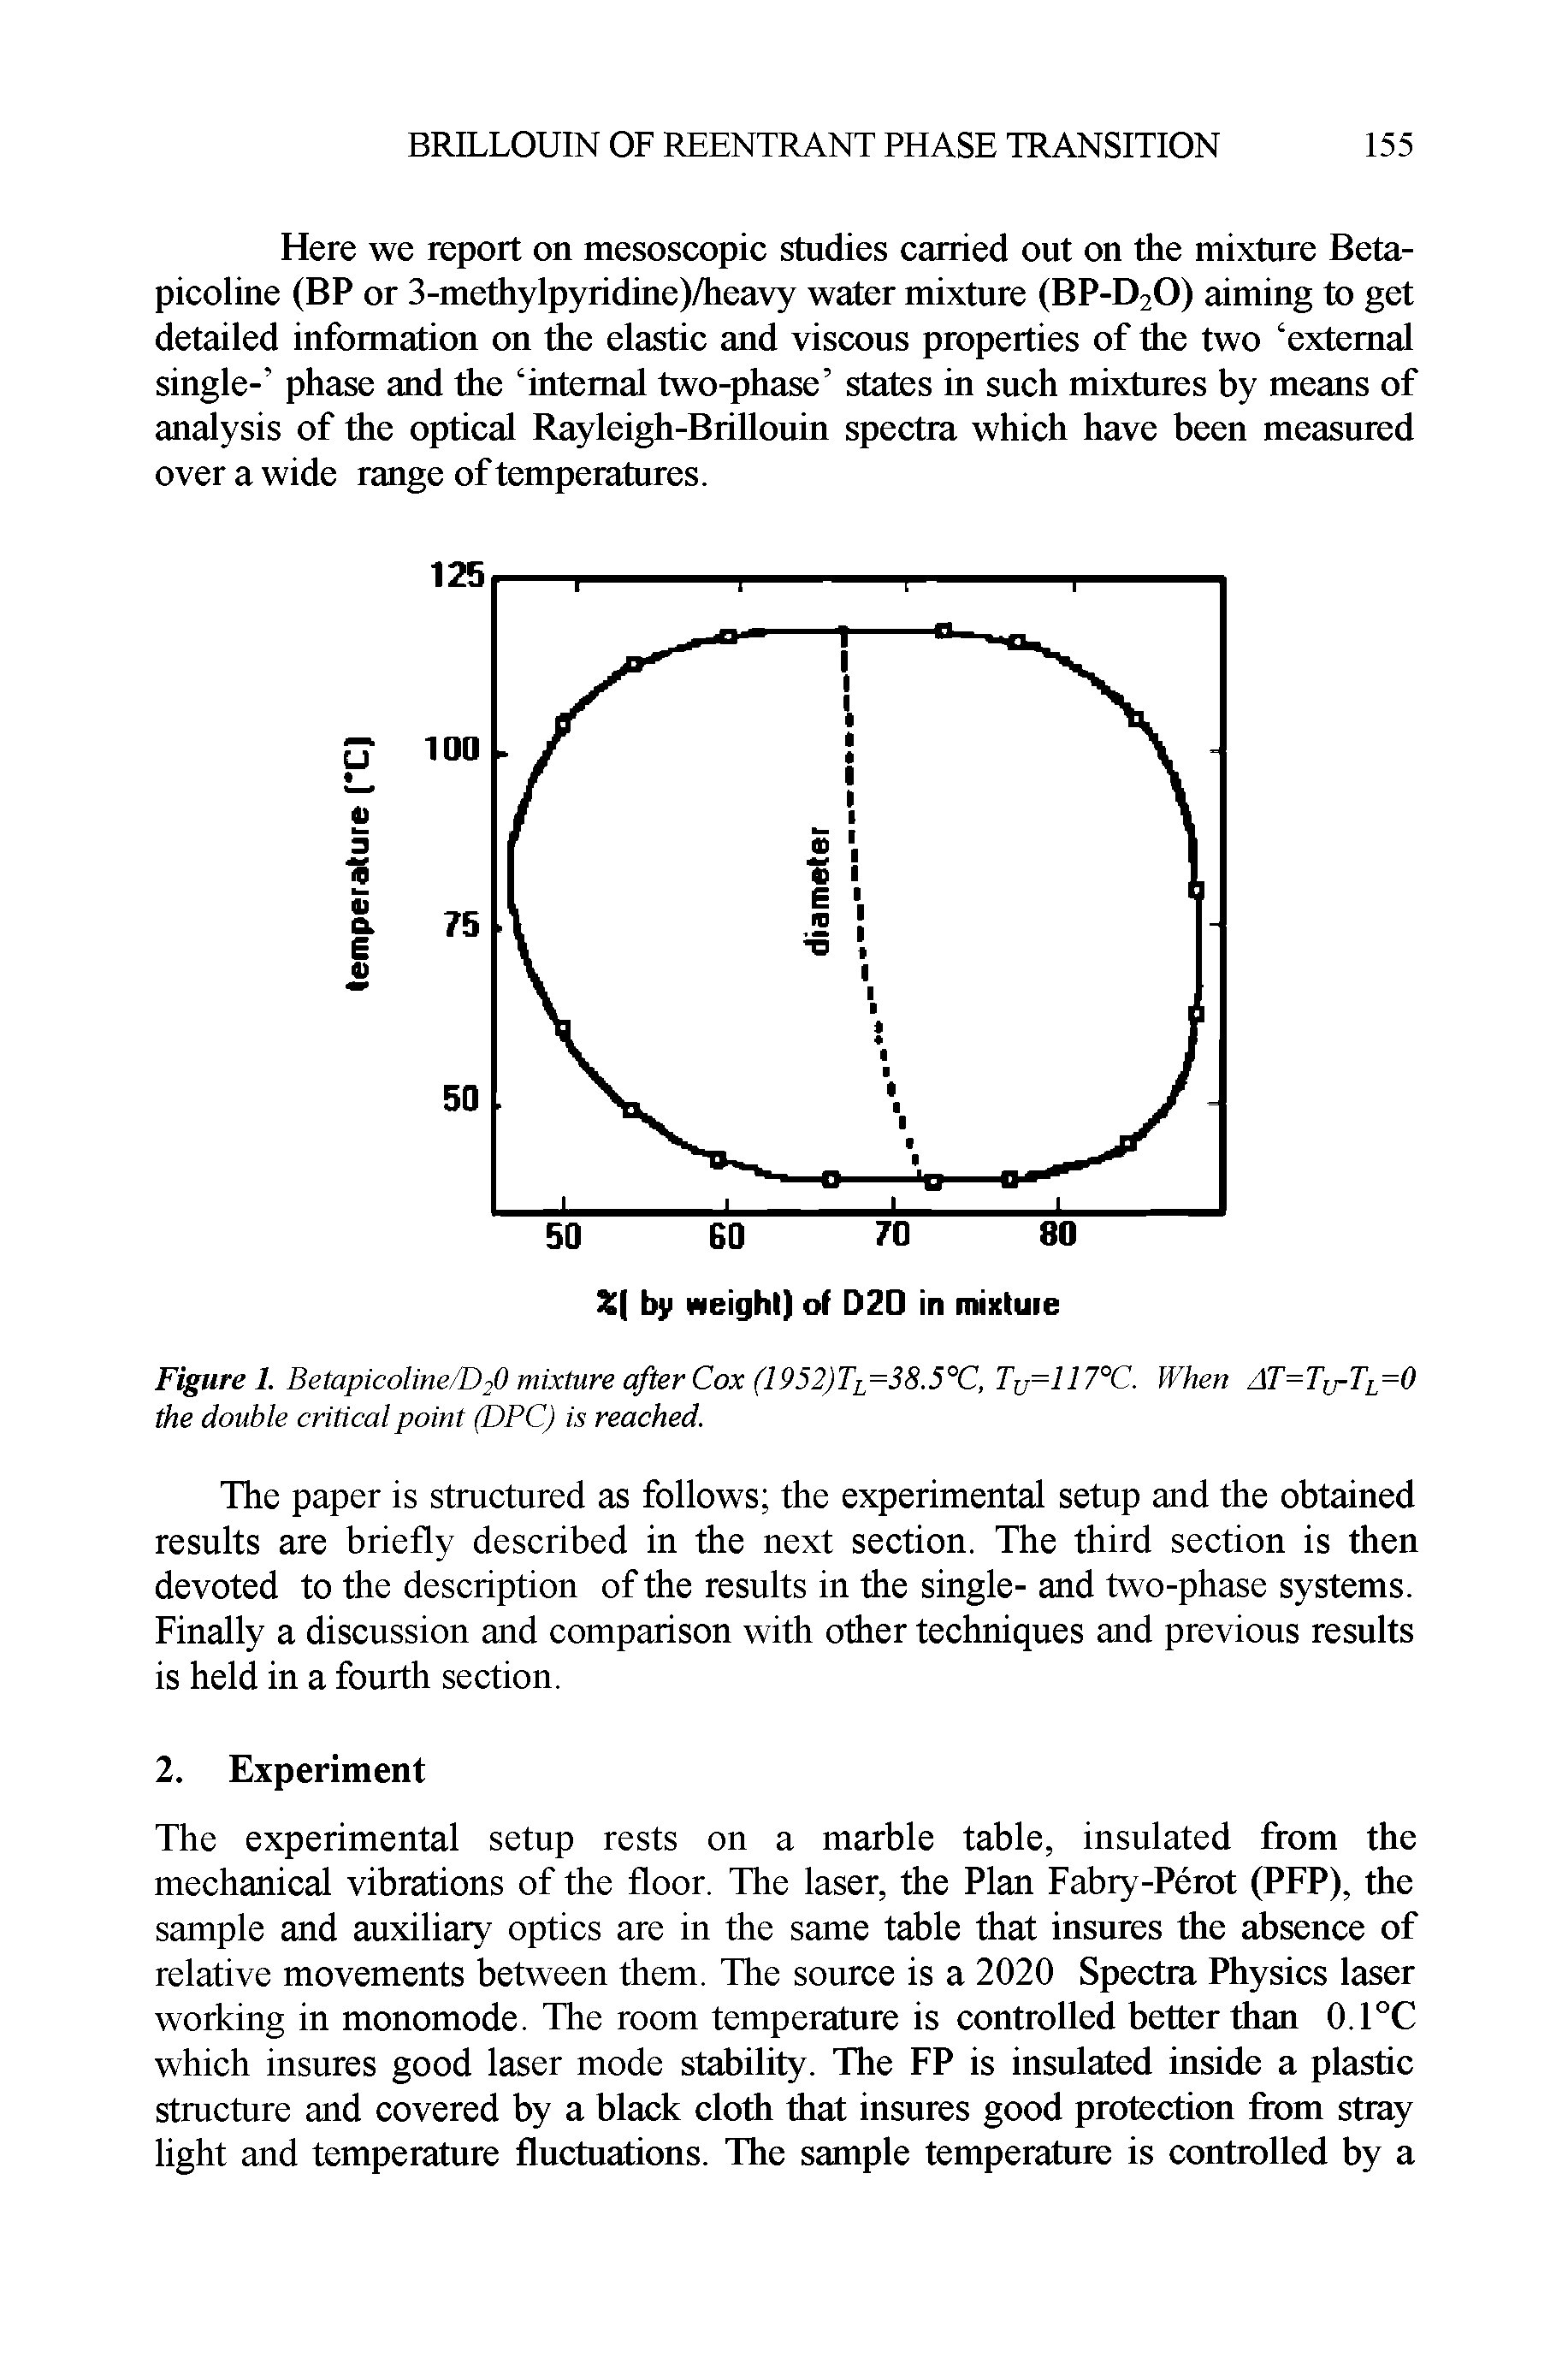 Figure 1. Betapicoline/D20 mixture after Cox (1952)Ti=38.5°C, Tjj=117°C. When AT=TirTi=0 the double critical point (DPC) is reached.